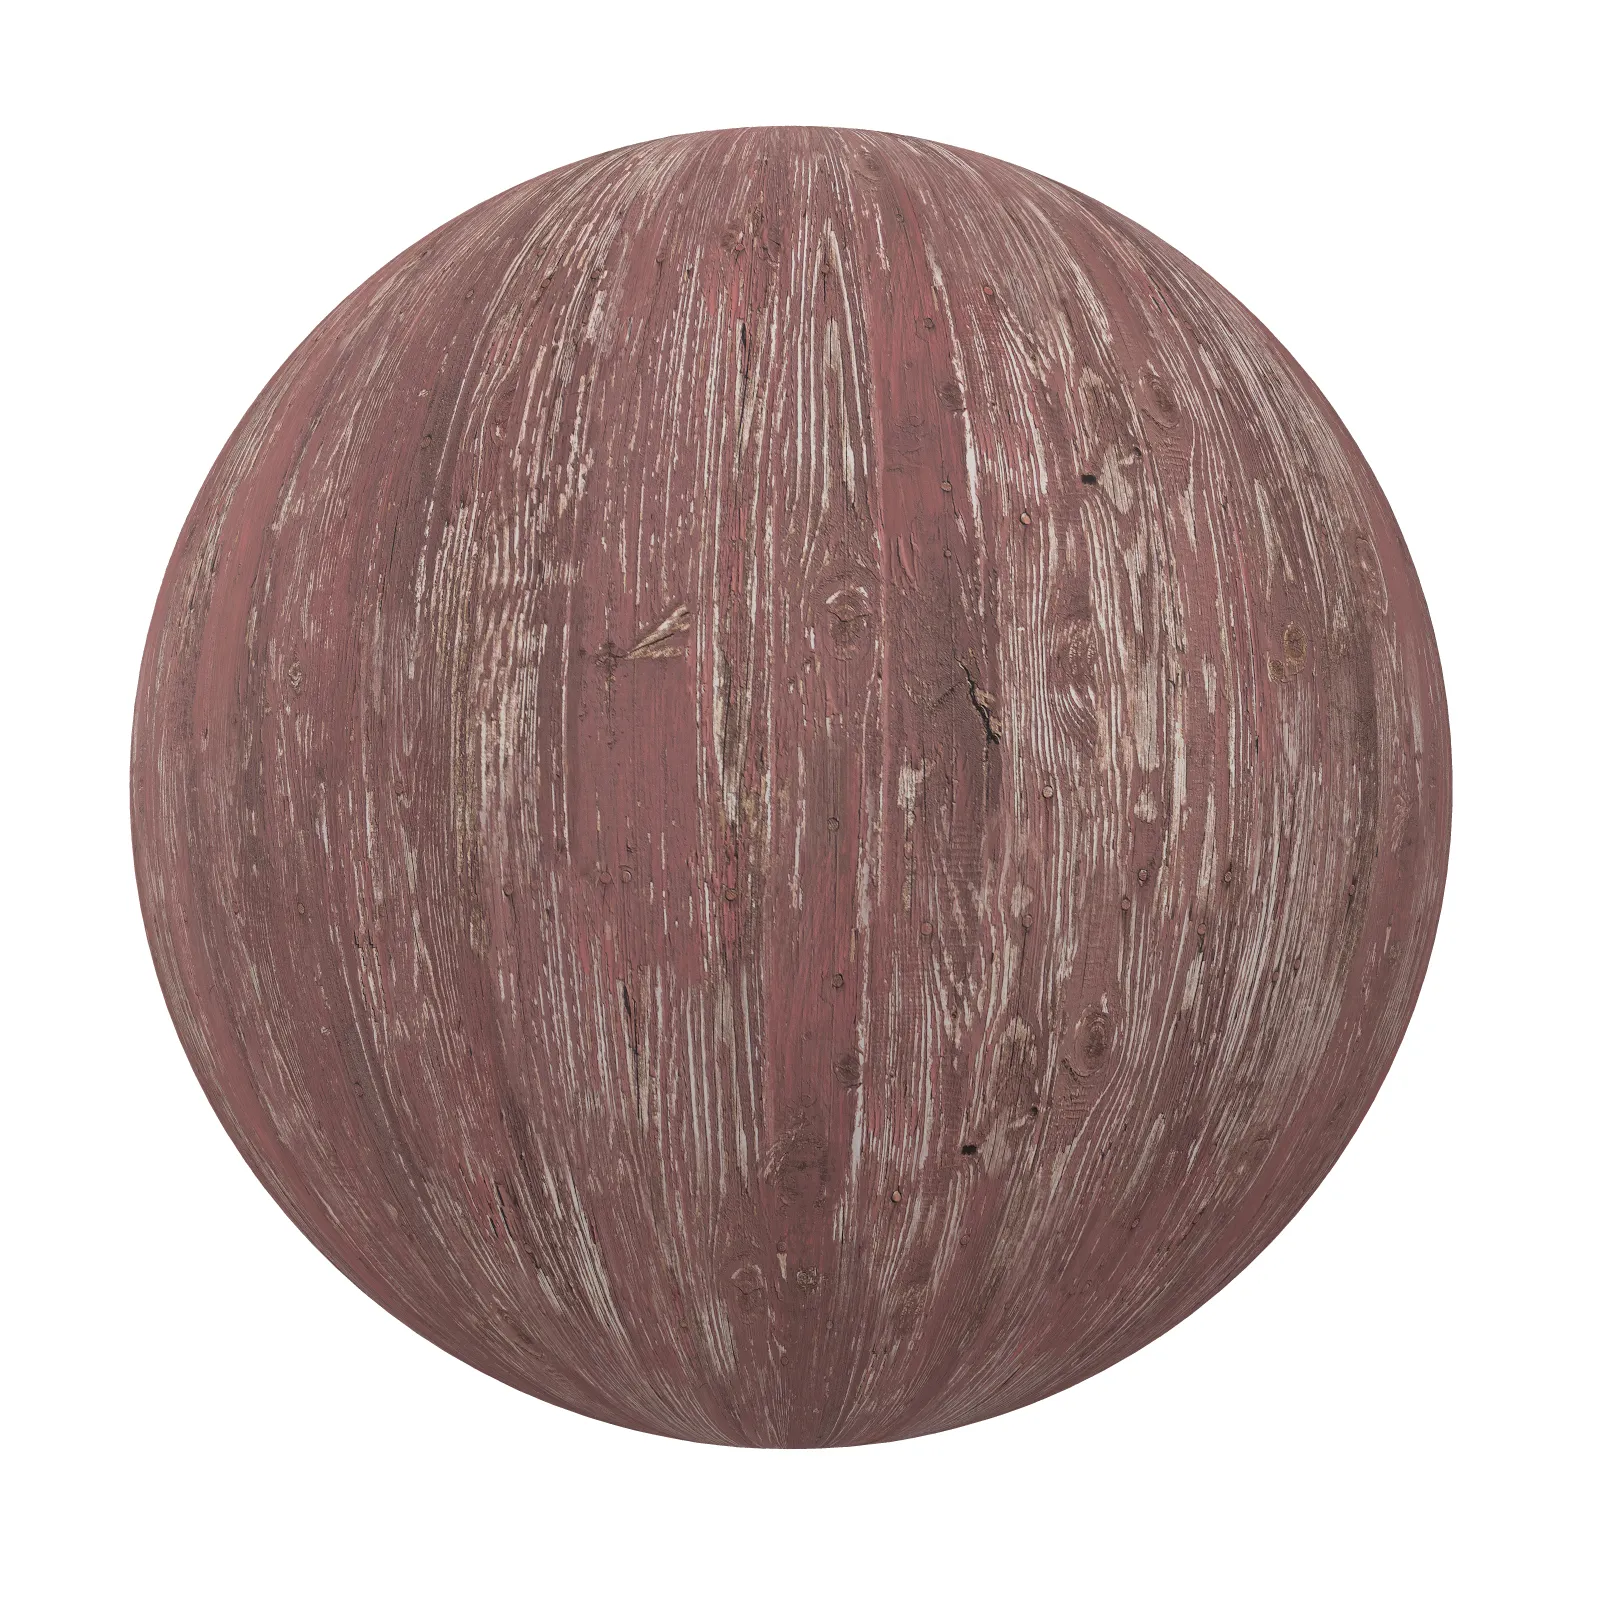 3ds Max Files – Texture – 8 – Wood Texture – 130 – Wood Texture by Minh Nguyen.